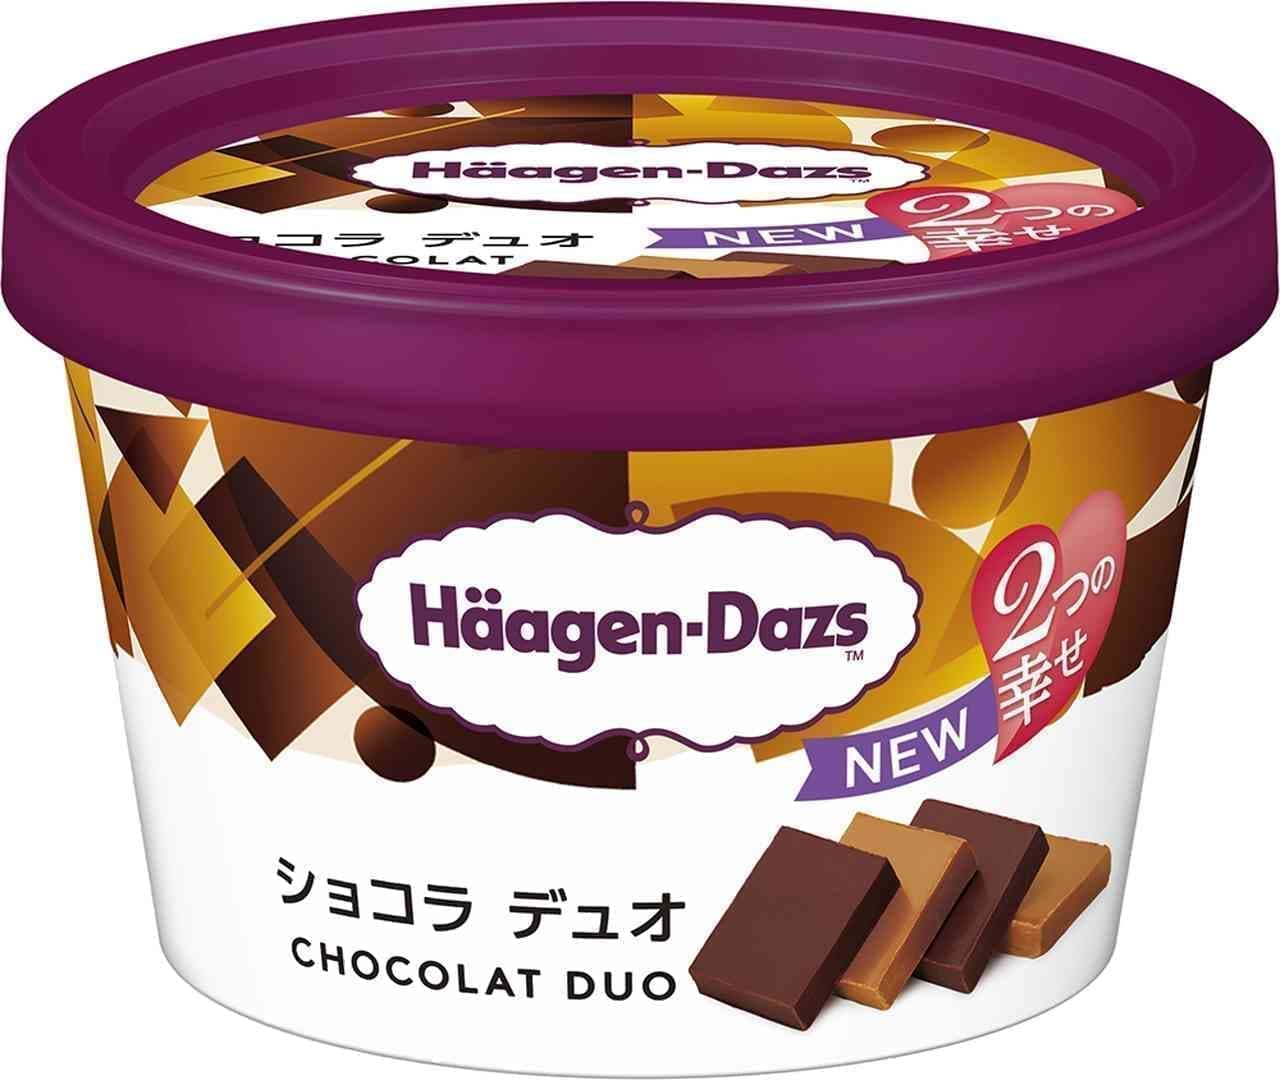 Haagen-Dazs Mini Cup "Chocolat Duo